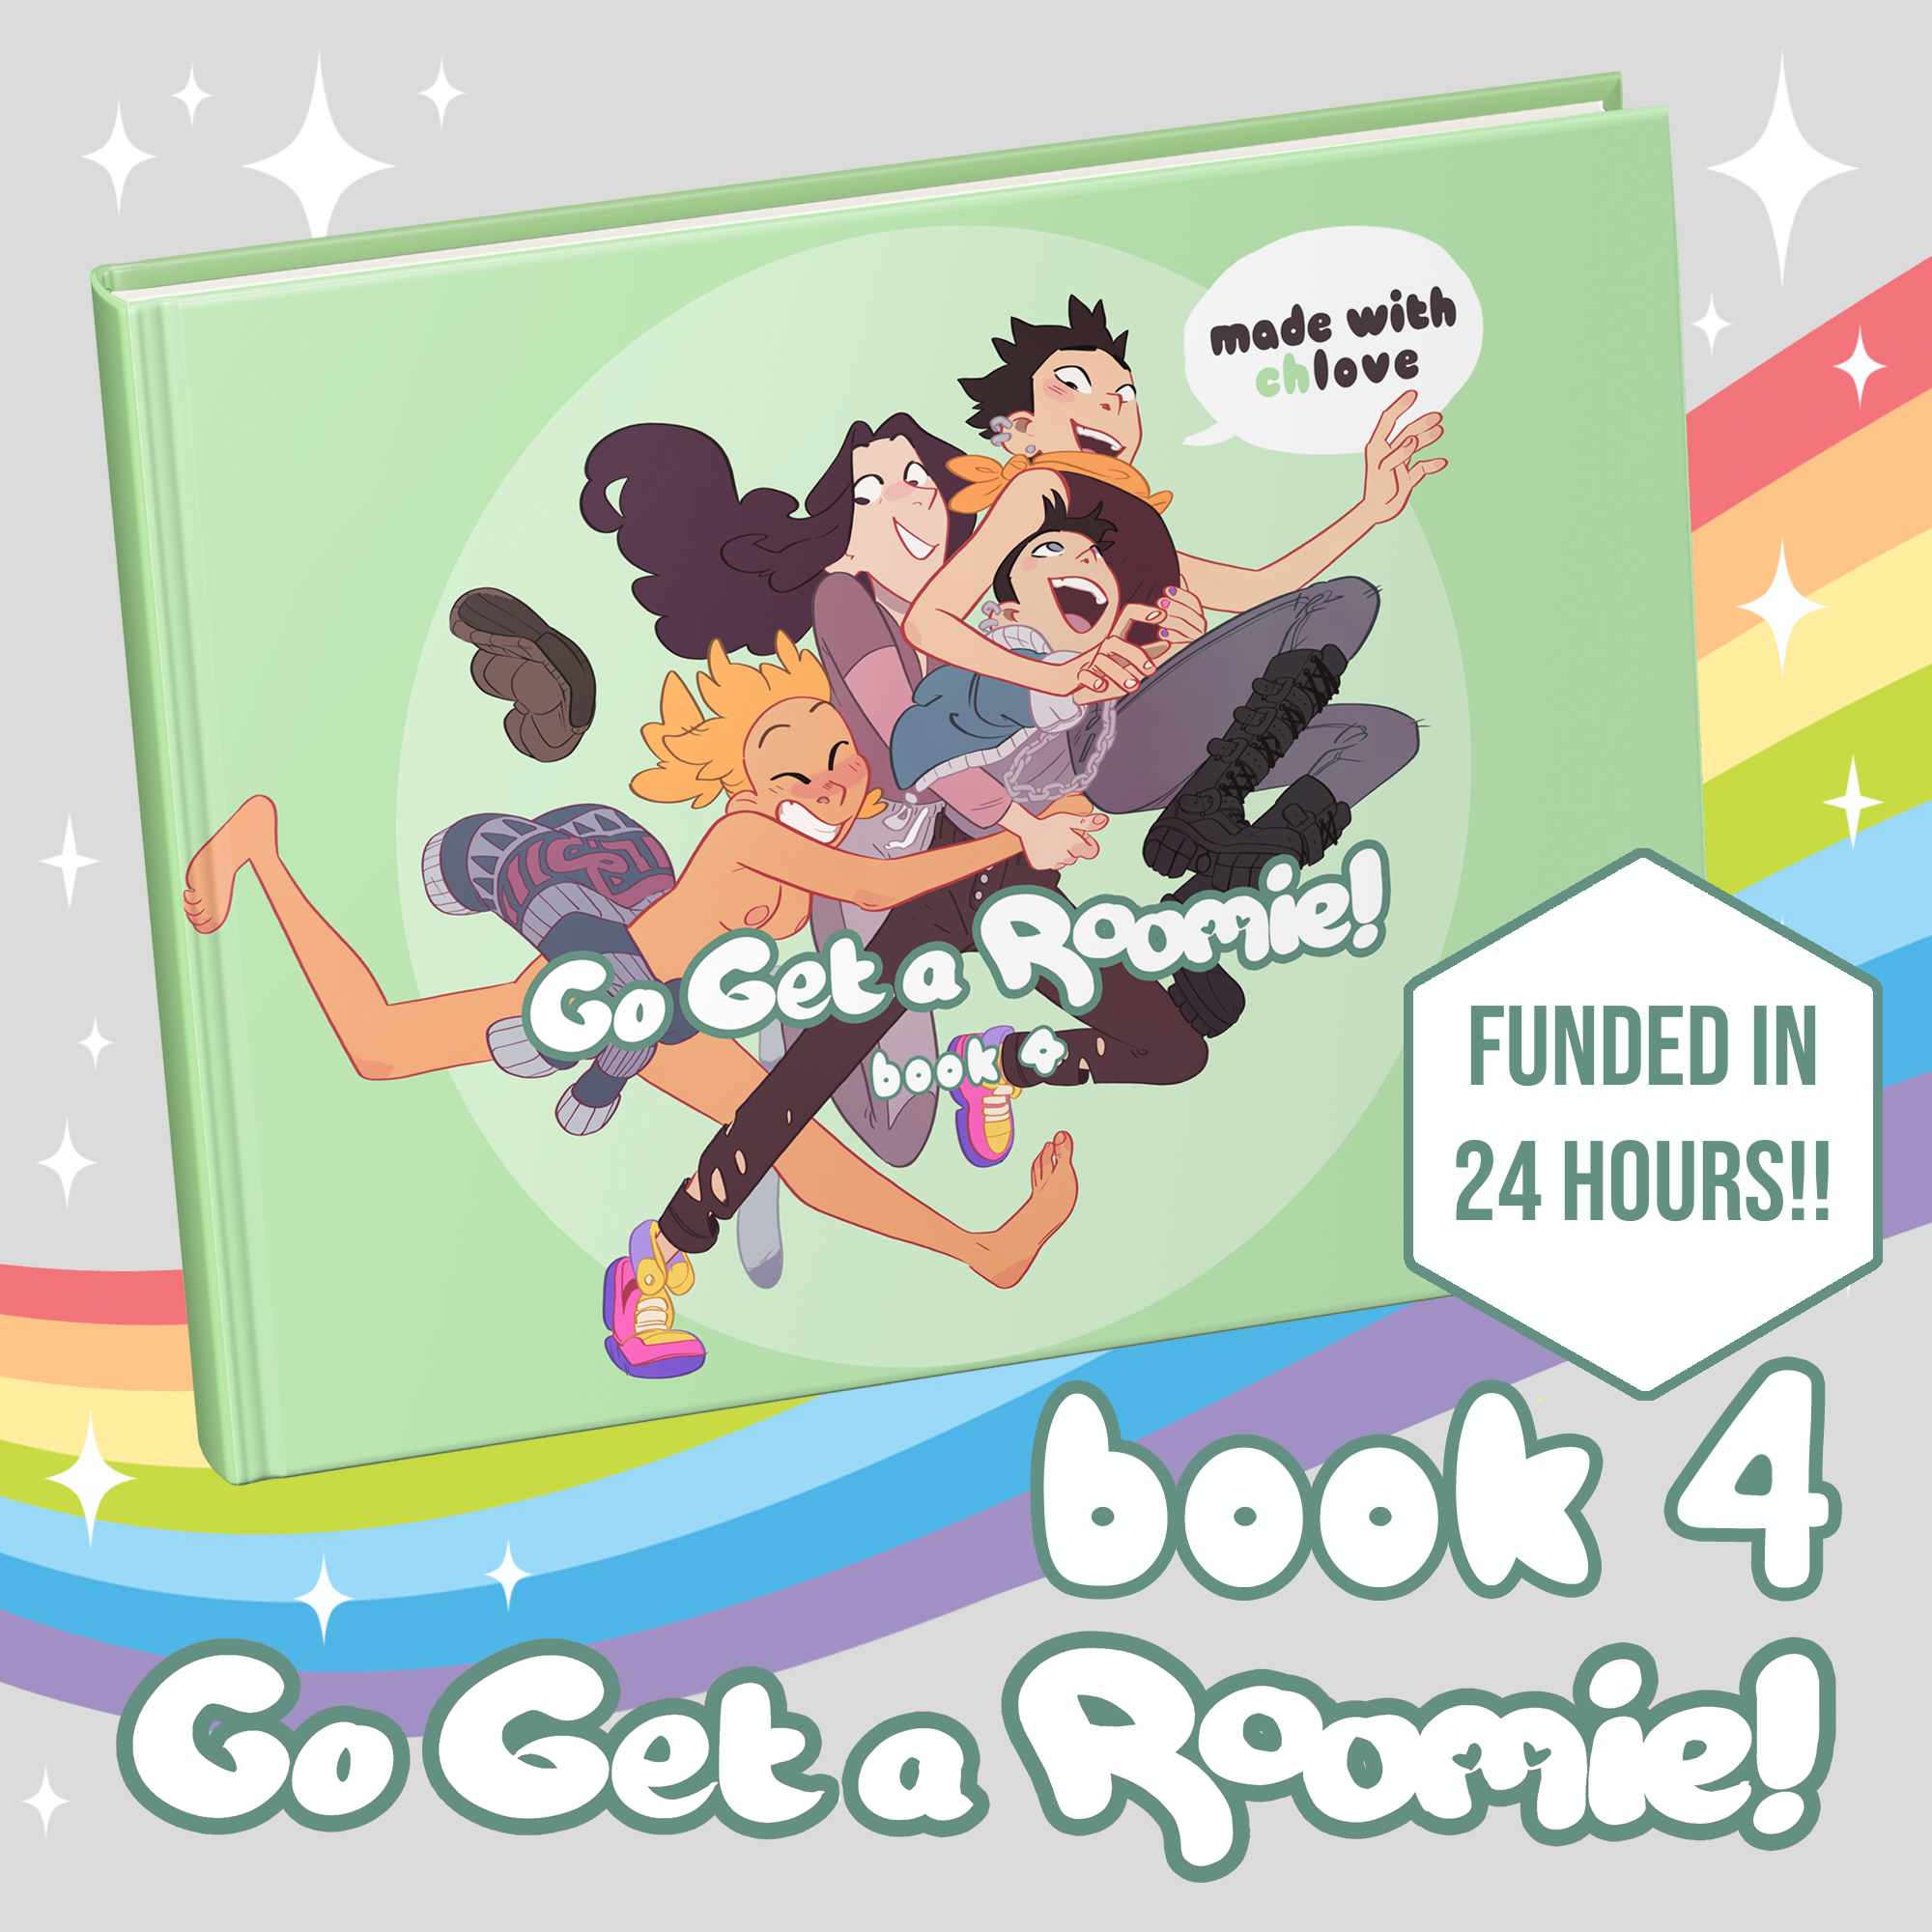 Go Get A Roomie - Book 4